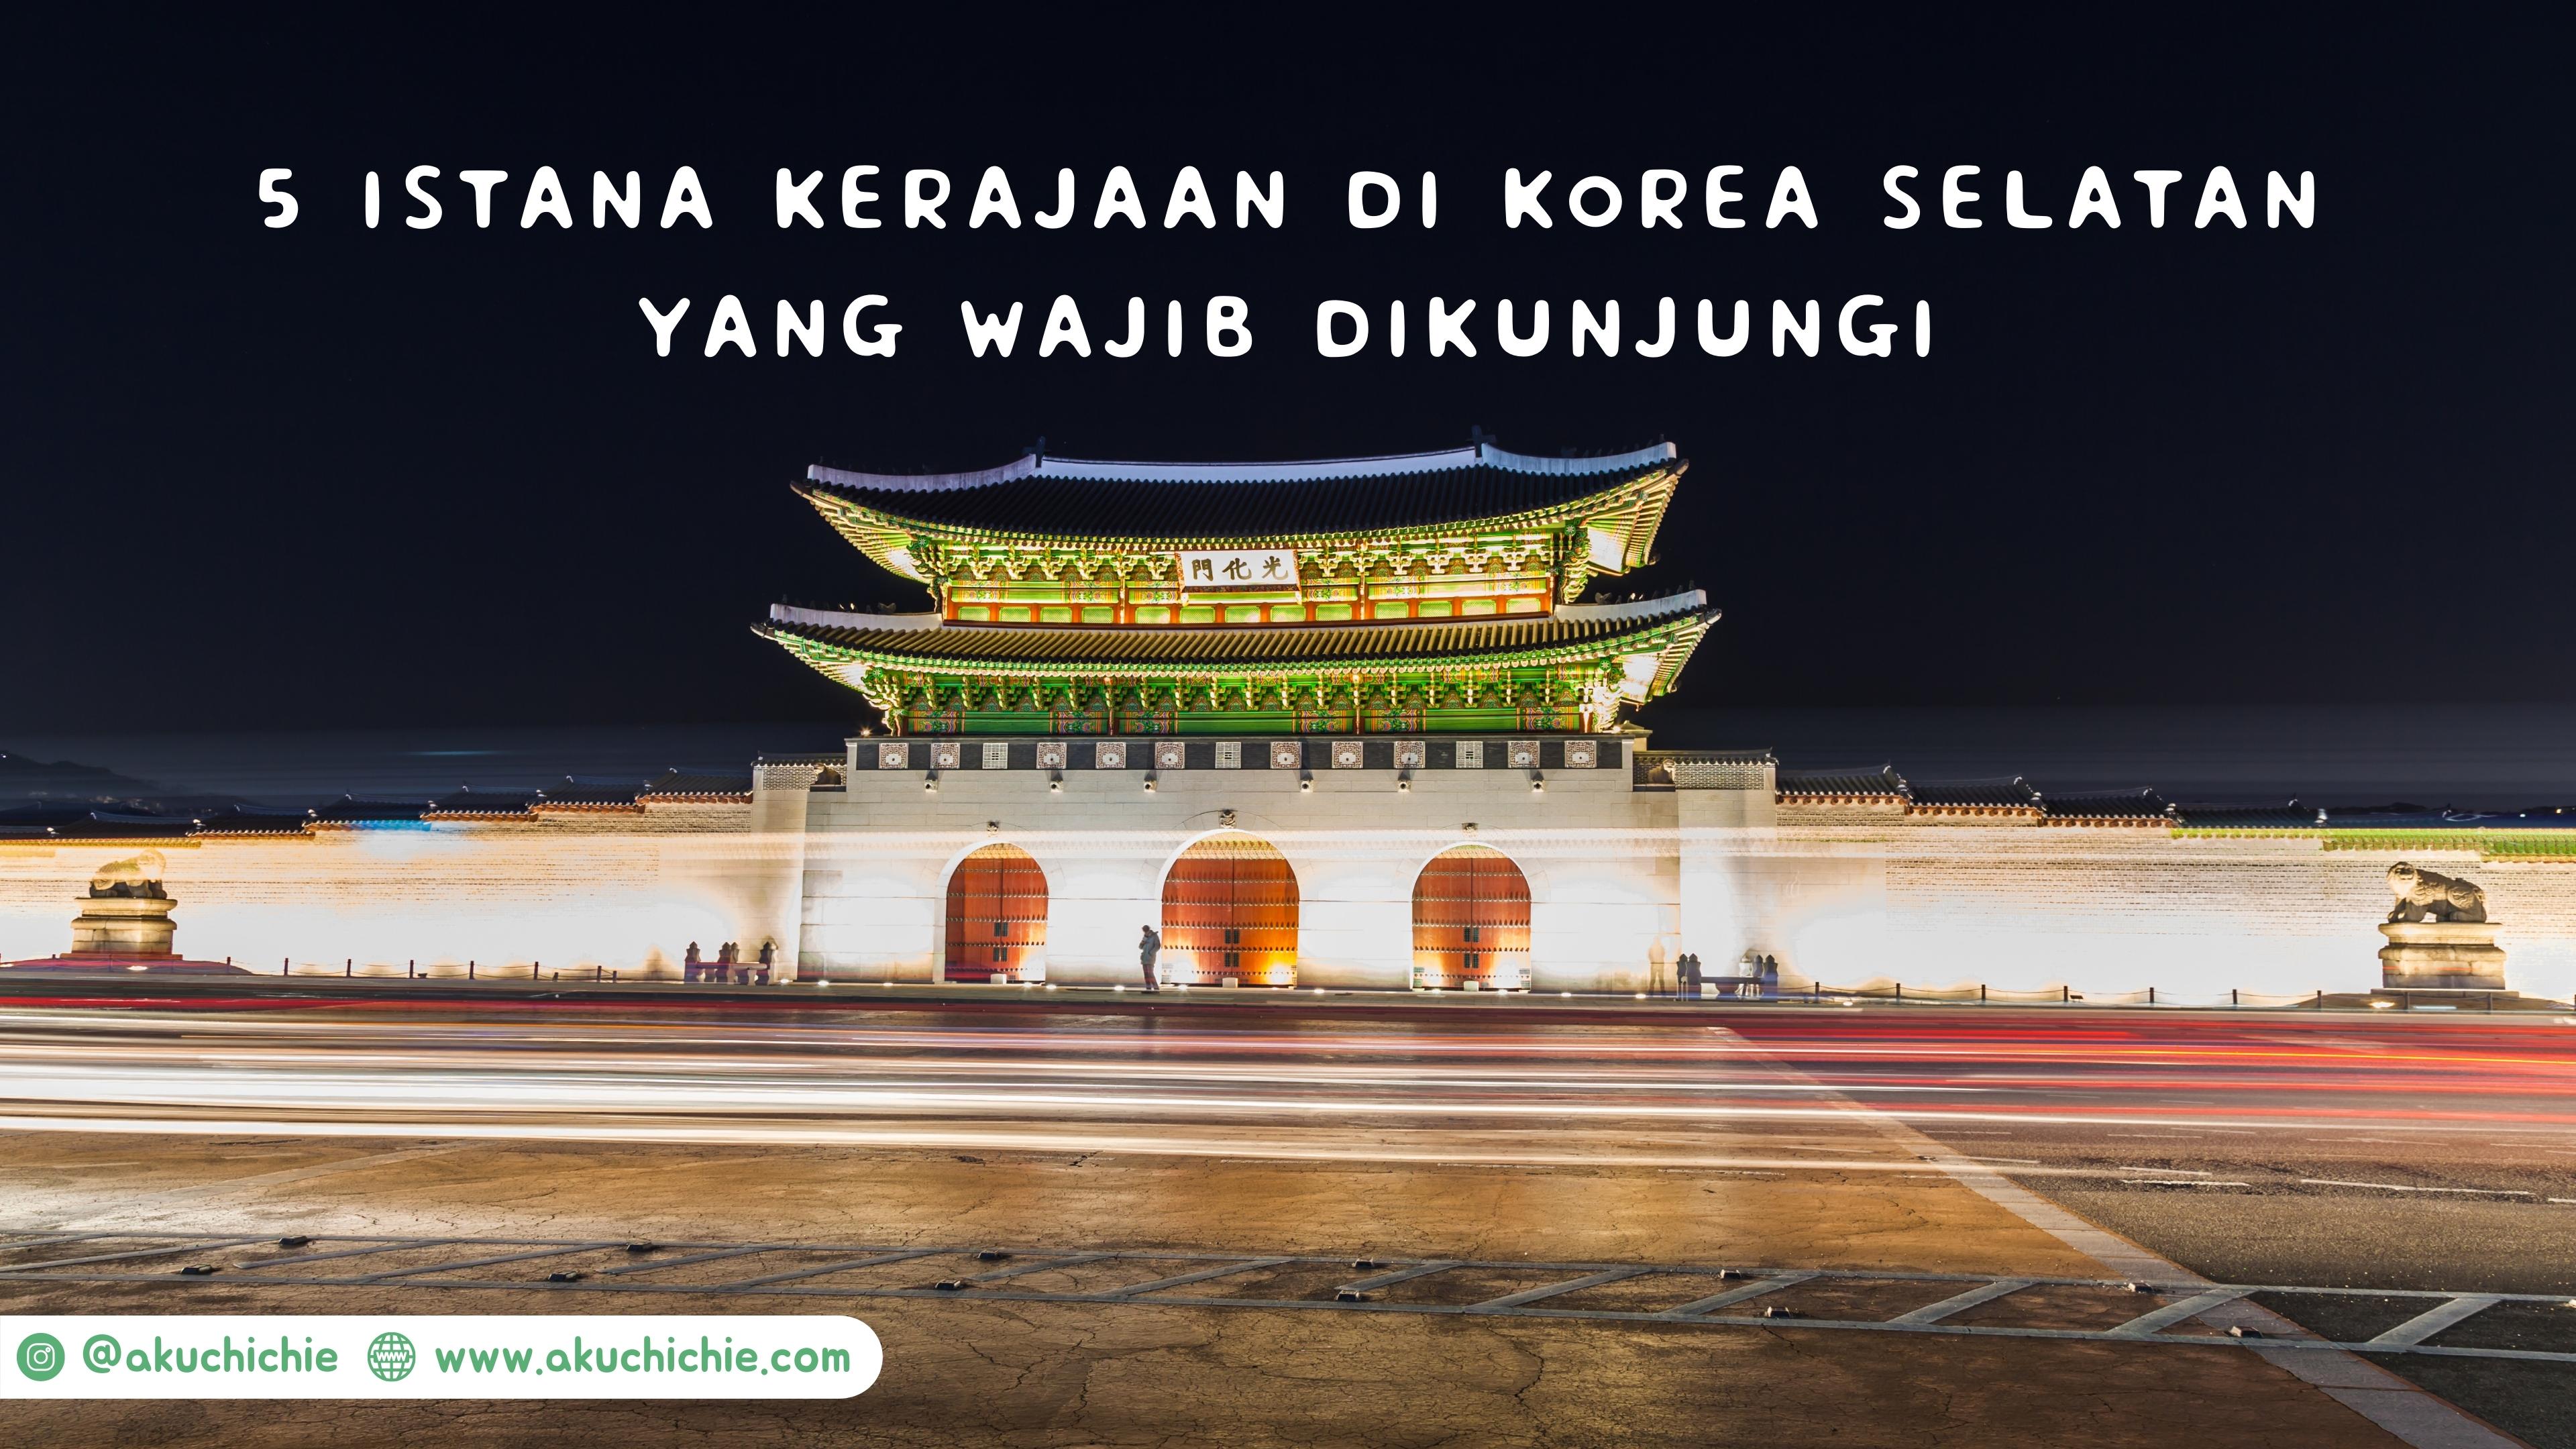 5 istana kerajaan di korea selatan yang wajib dikunjungi